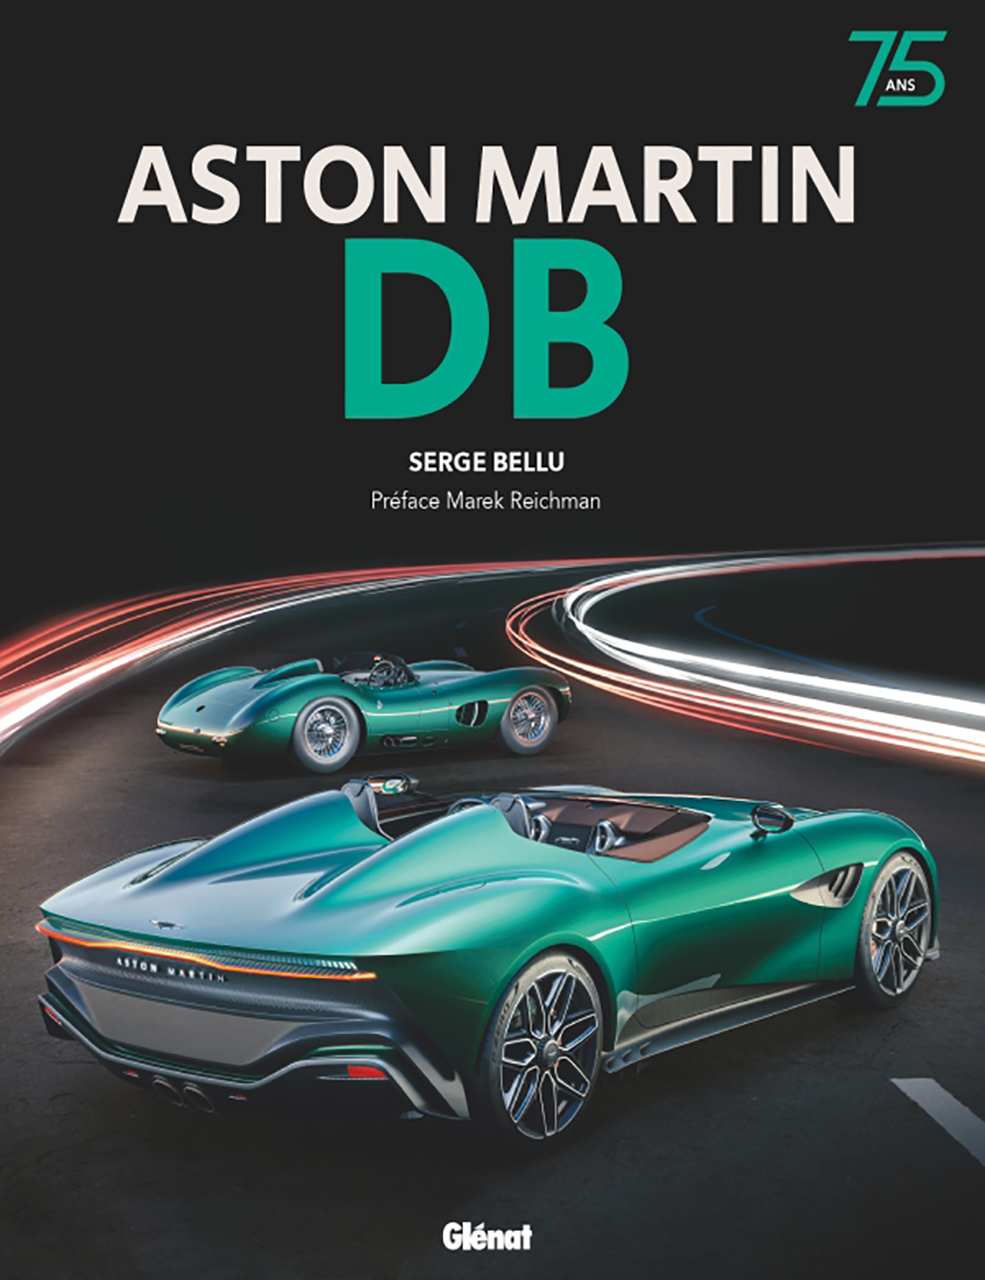 Aston martin db